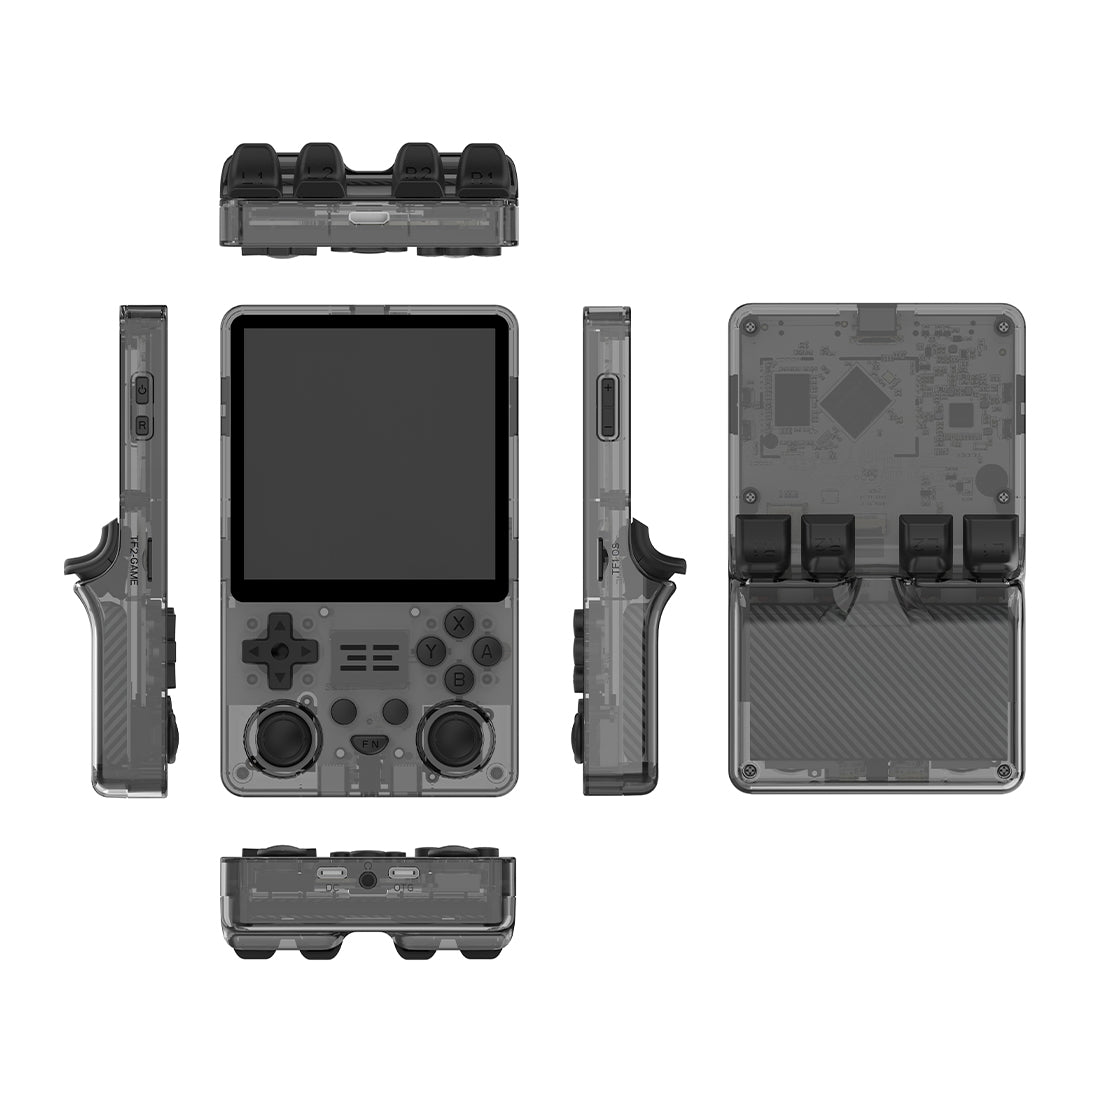 Powkiddy RGB20SX Retro Handheld Game Console - Mechdiy